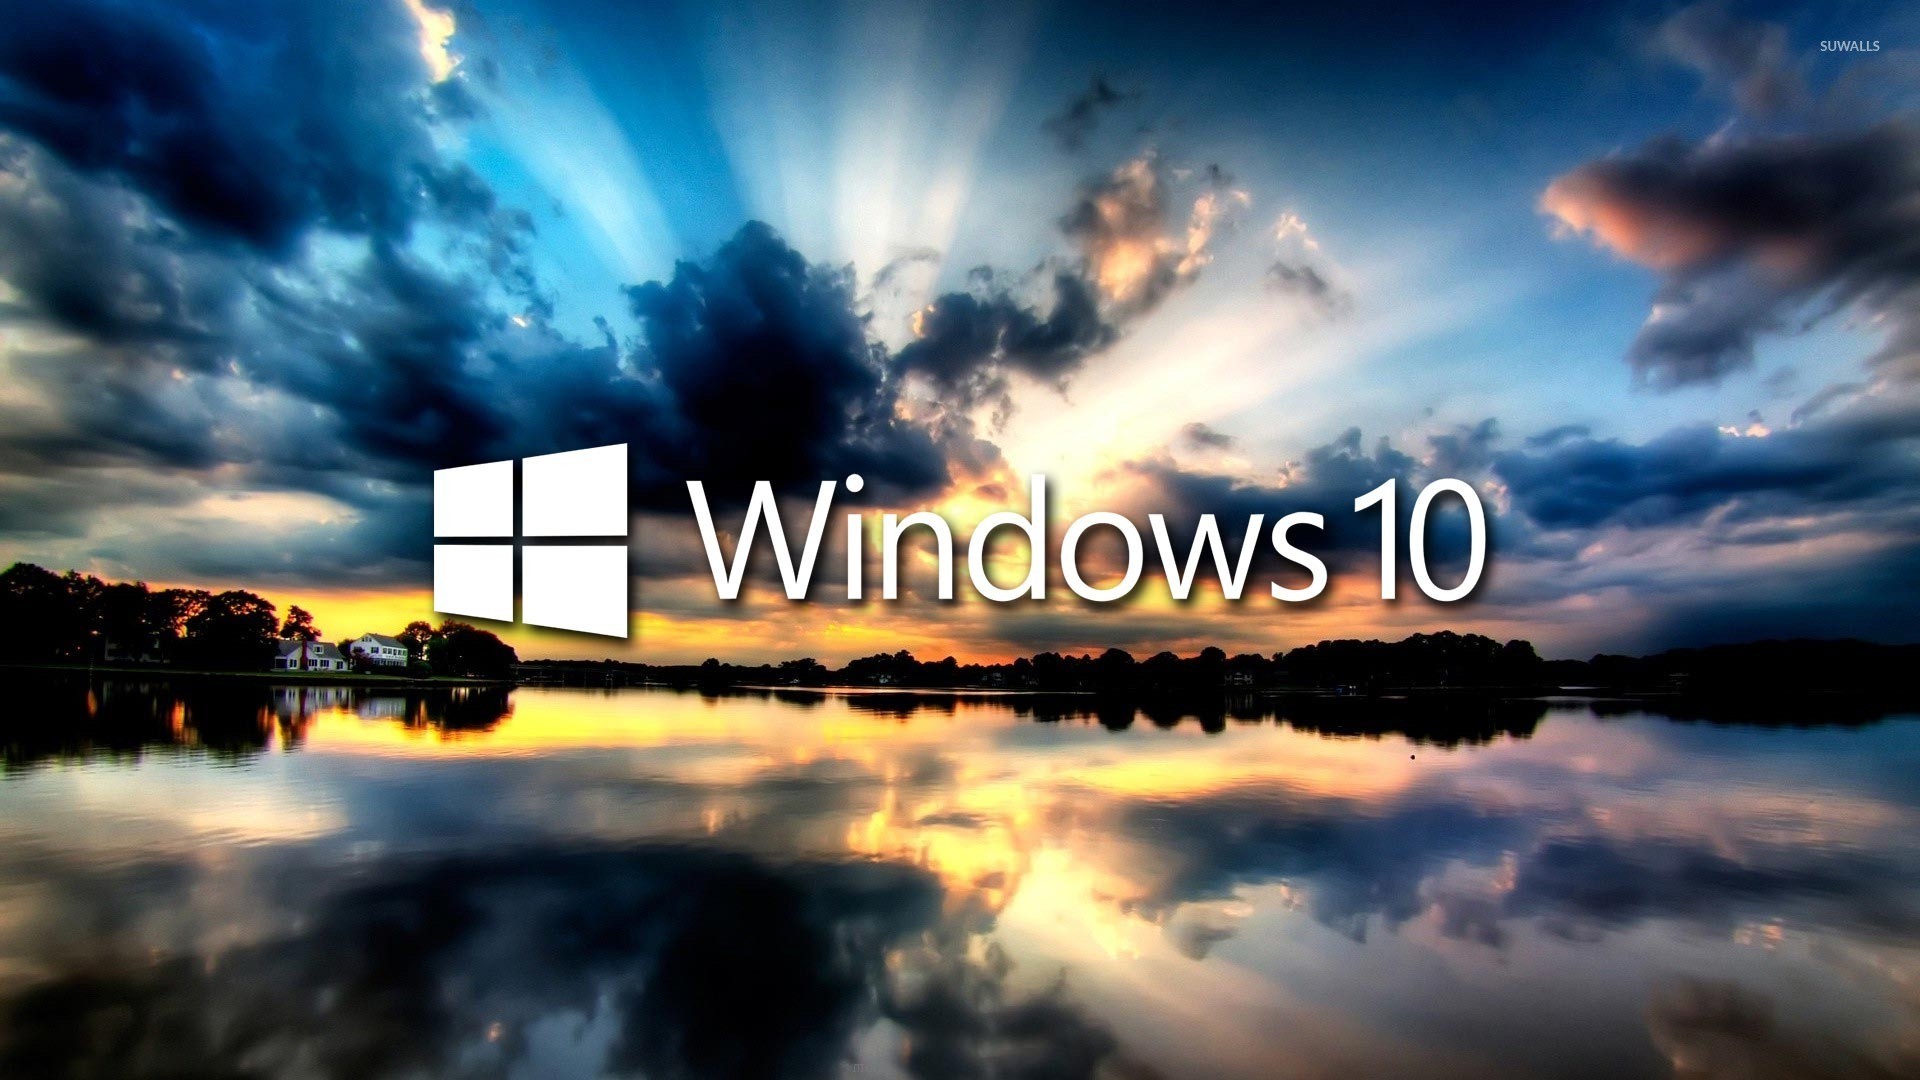 bitmessage and windows 10